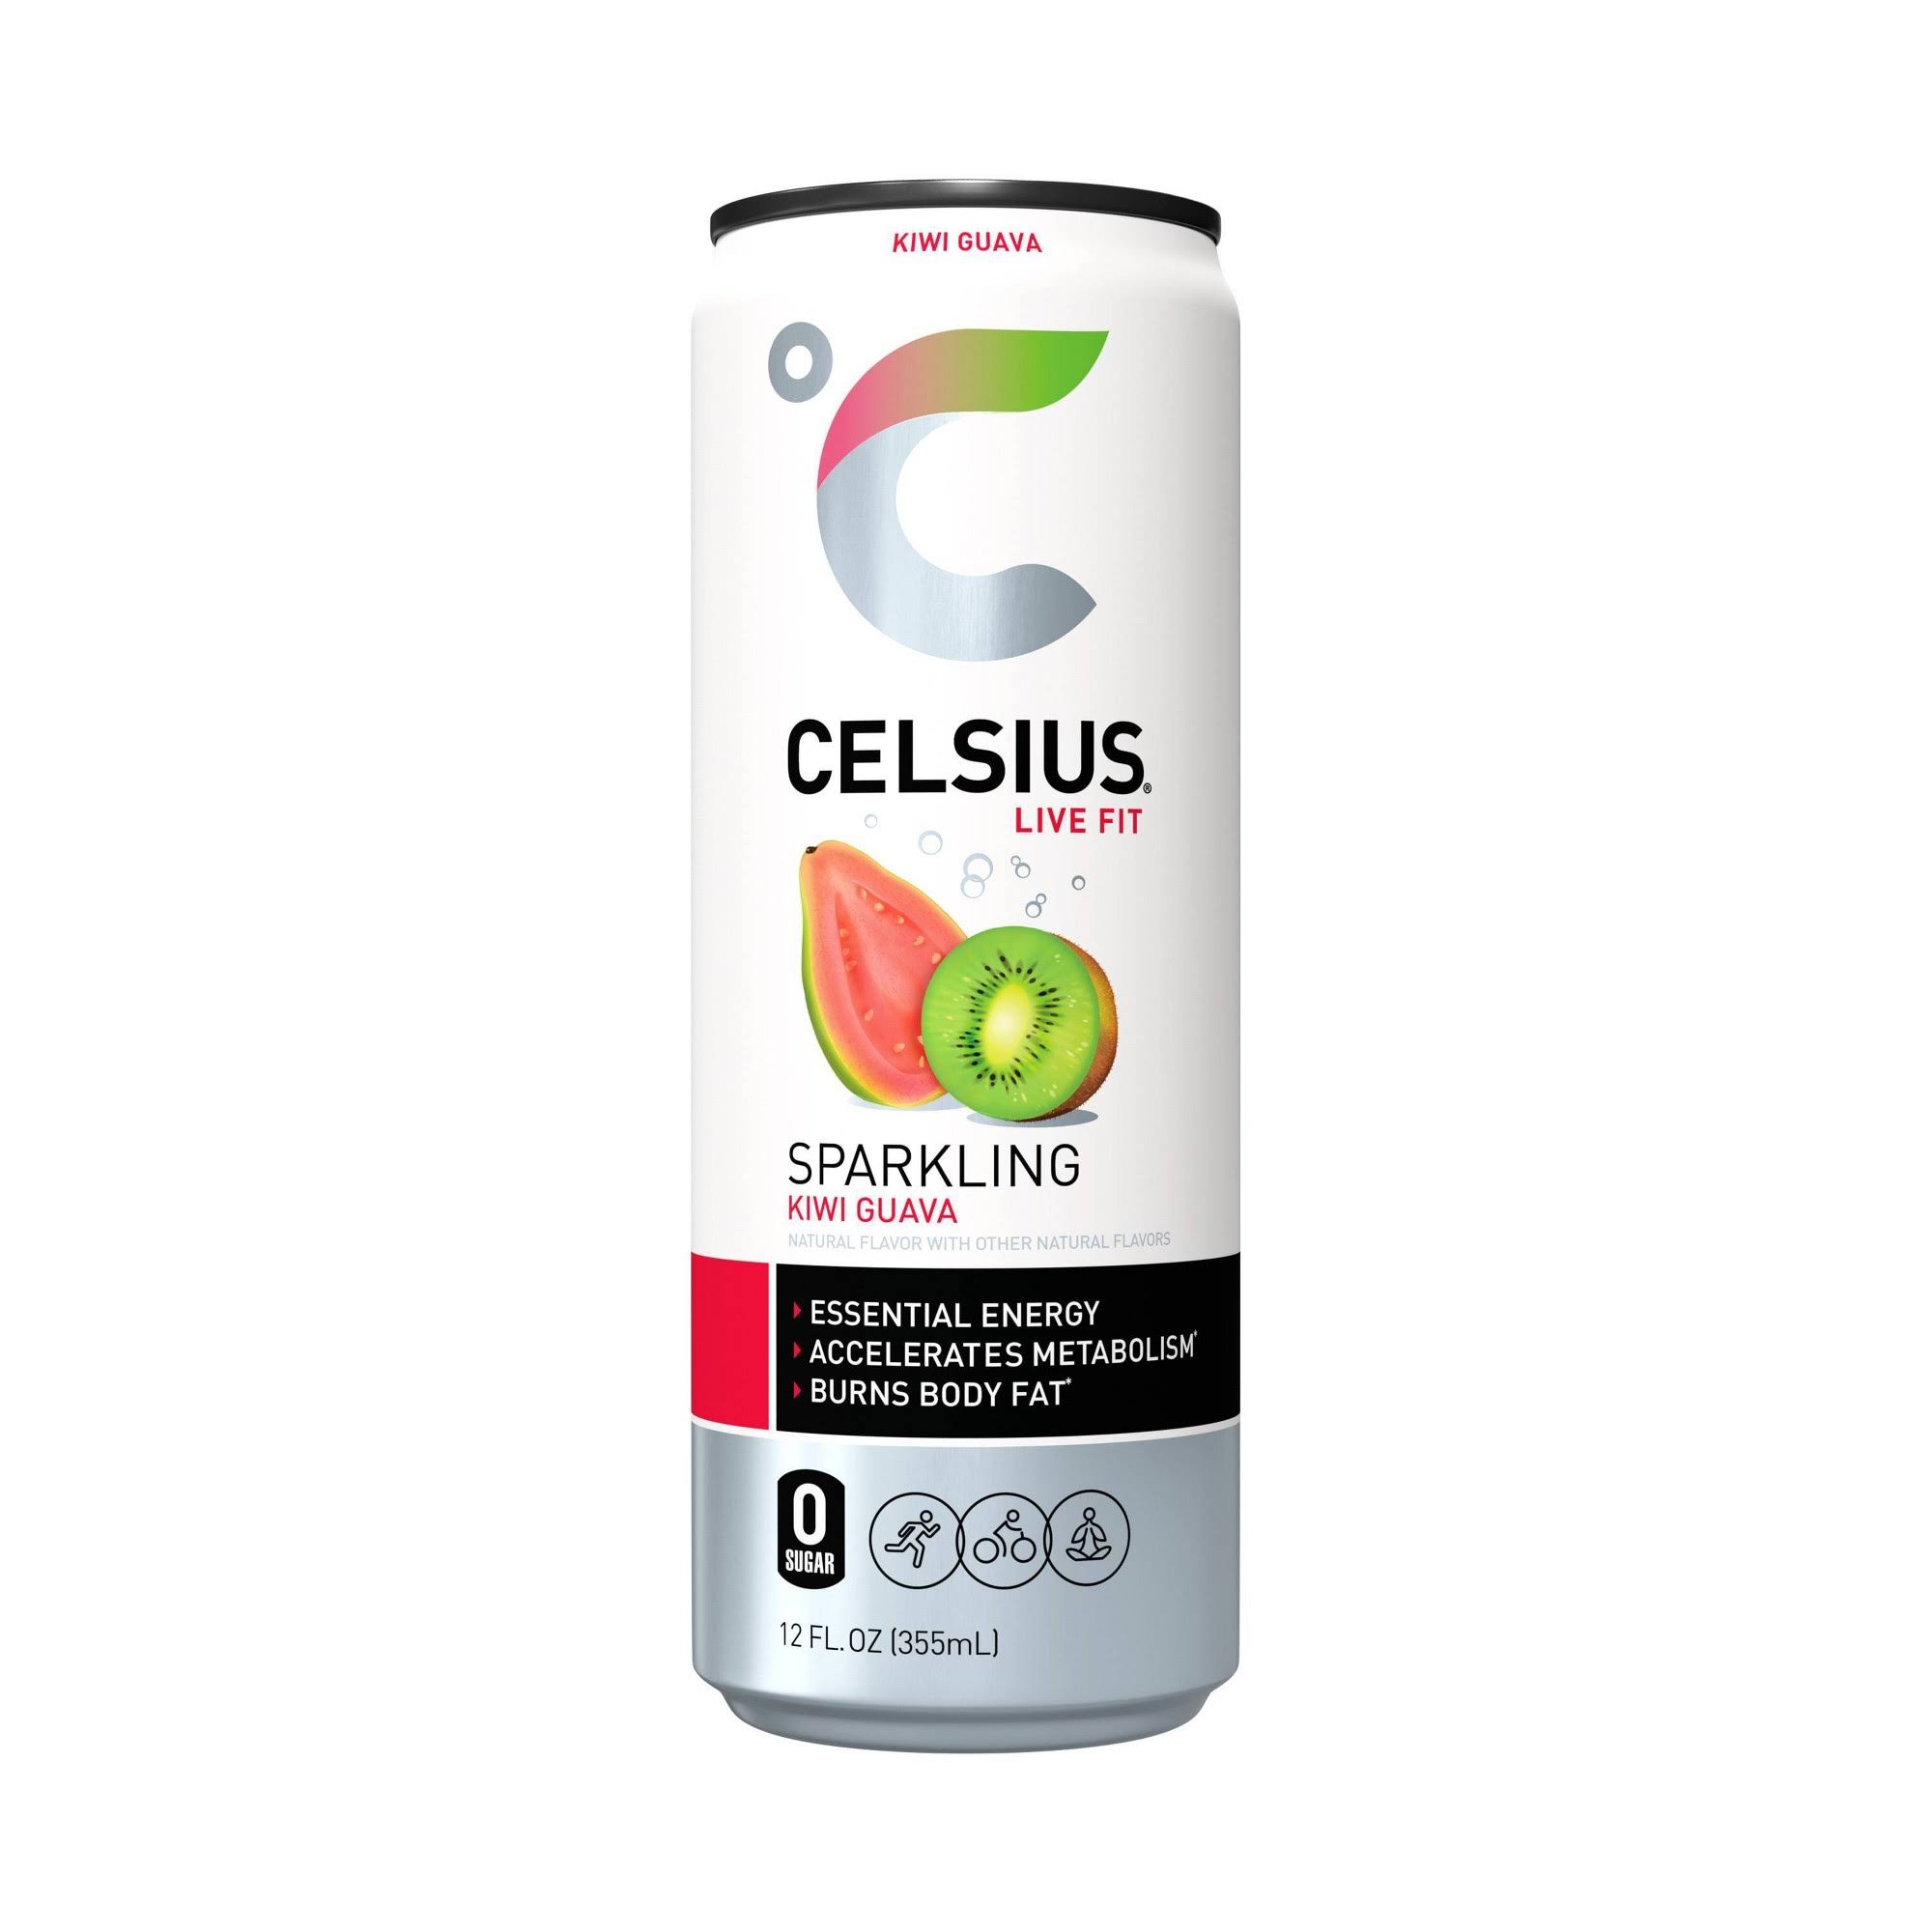 Celsius Sparkling Kiwi Guava, Functional Essential Energy Drink, 12 fl oz